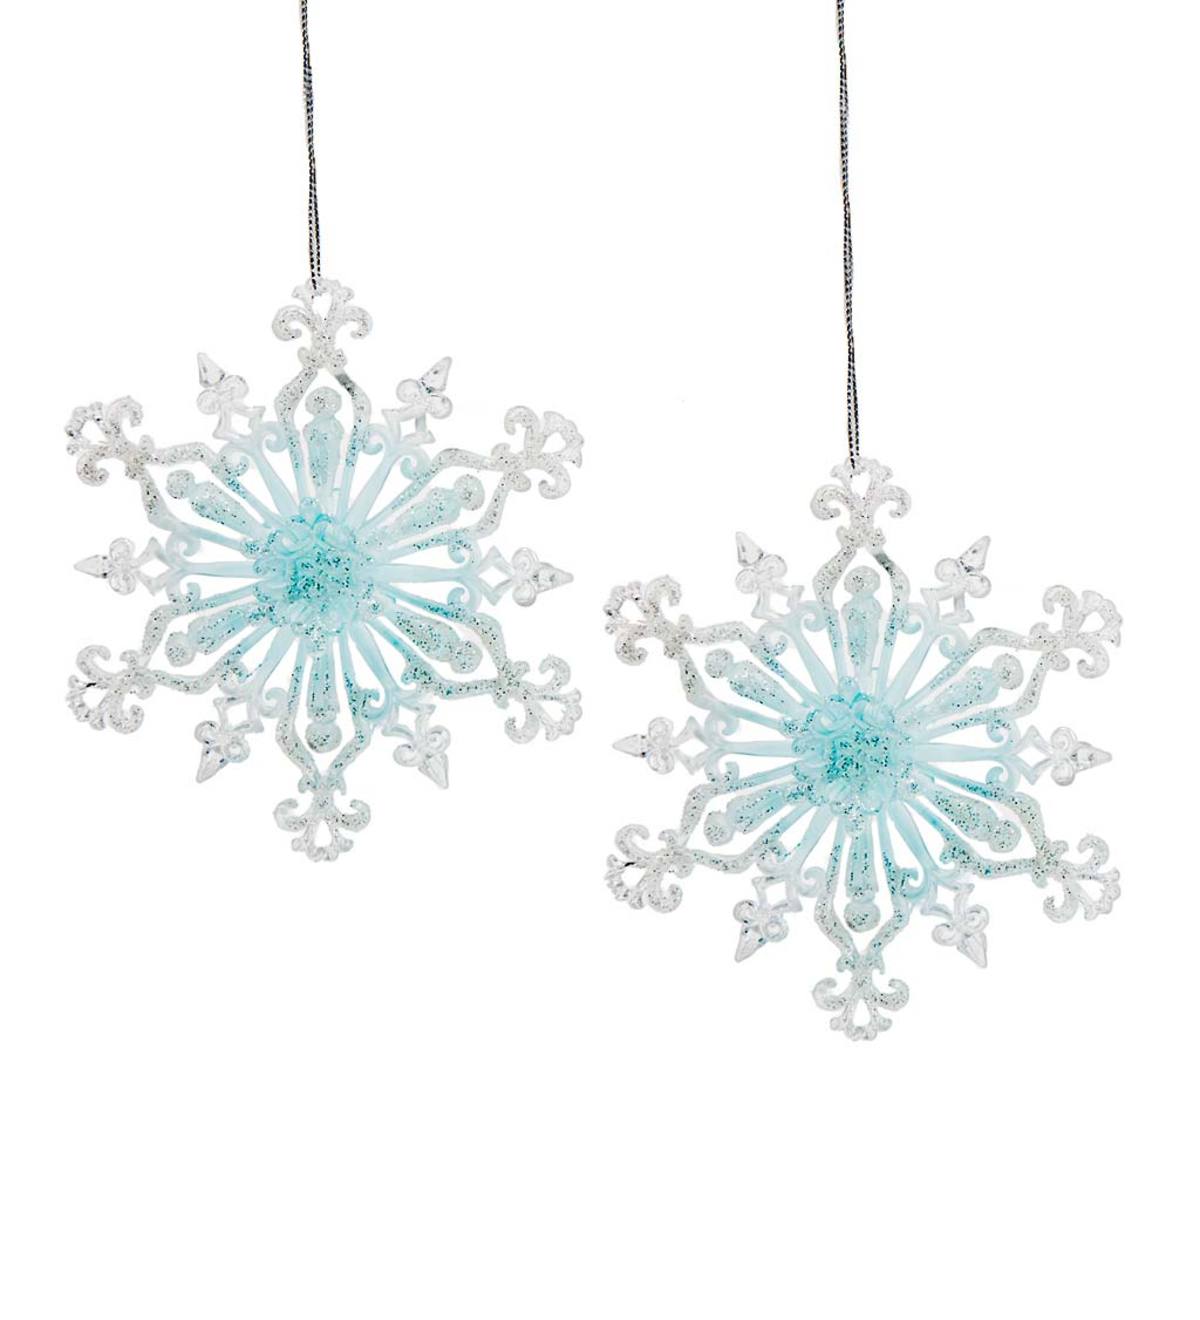 Acrylic Snowflake Christmas Ornaments, Set of 2